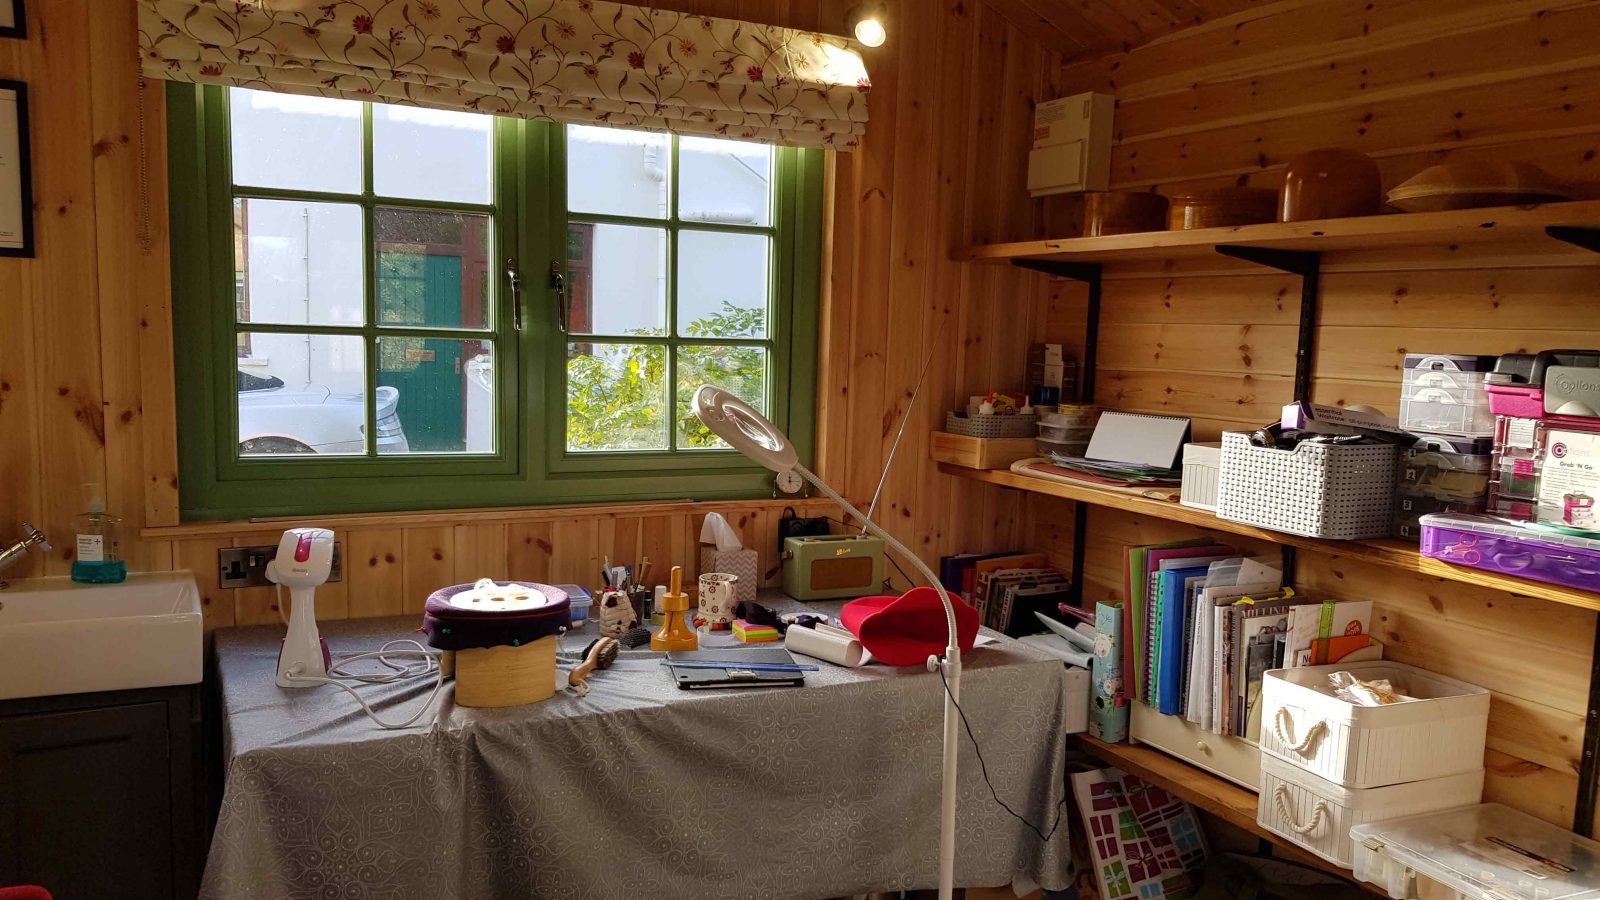 Inside view of Glen Moar Millinery studio showing Susan's work table and hat blocks